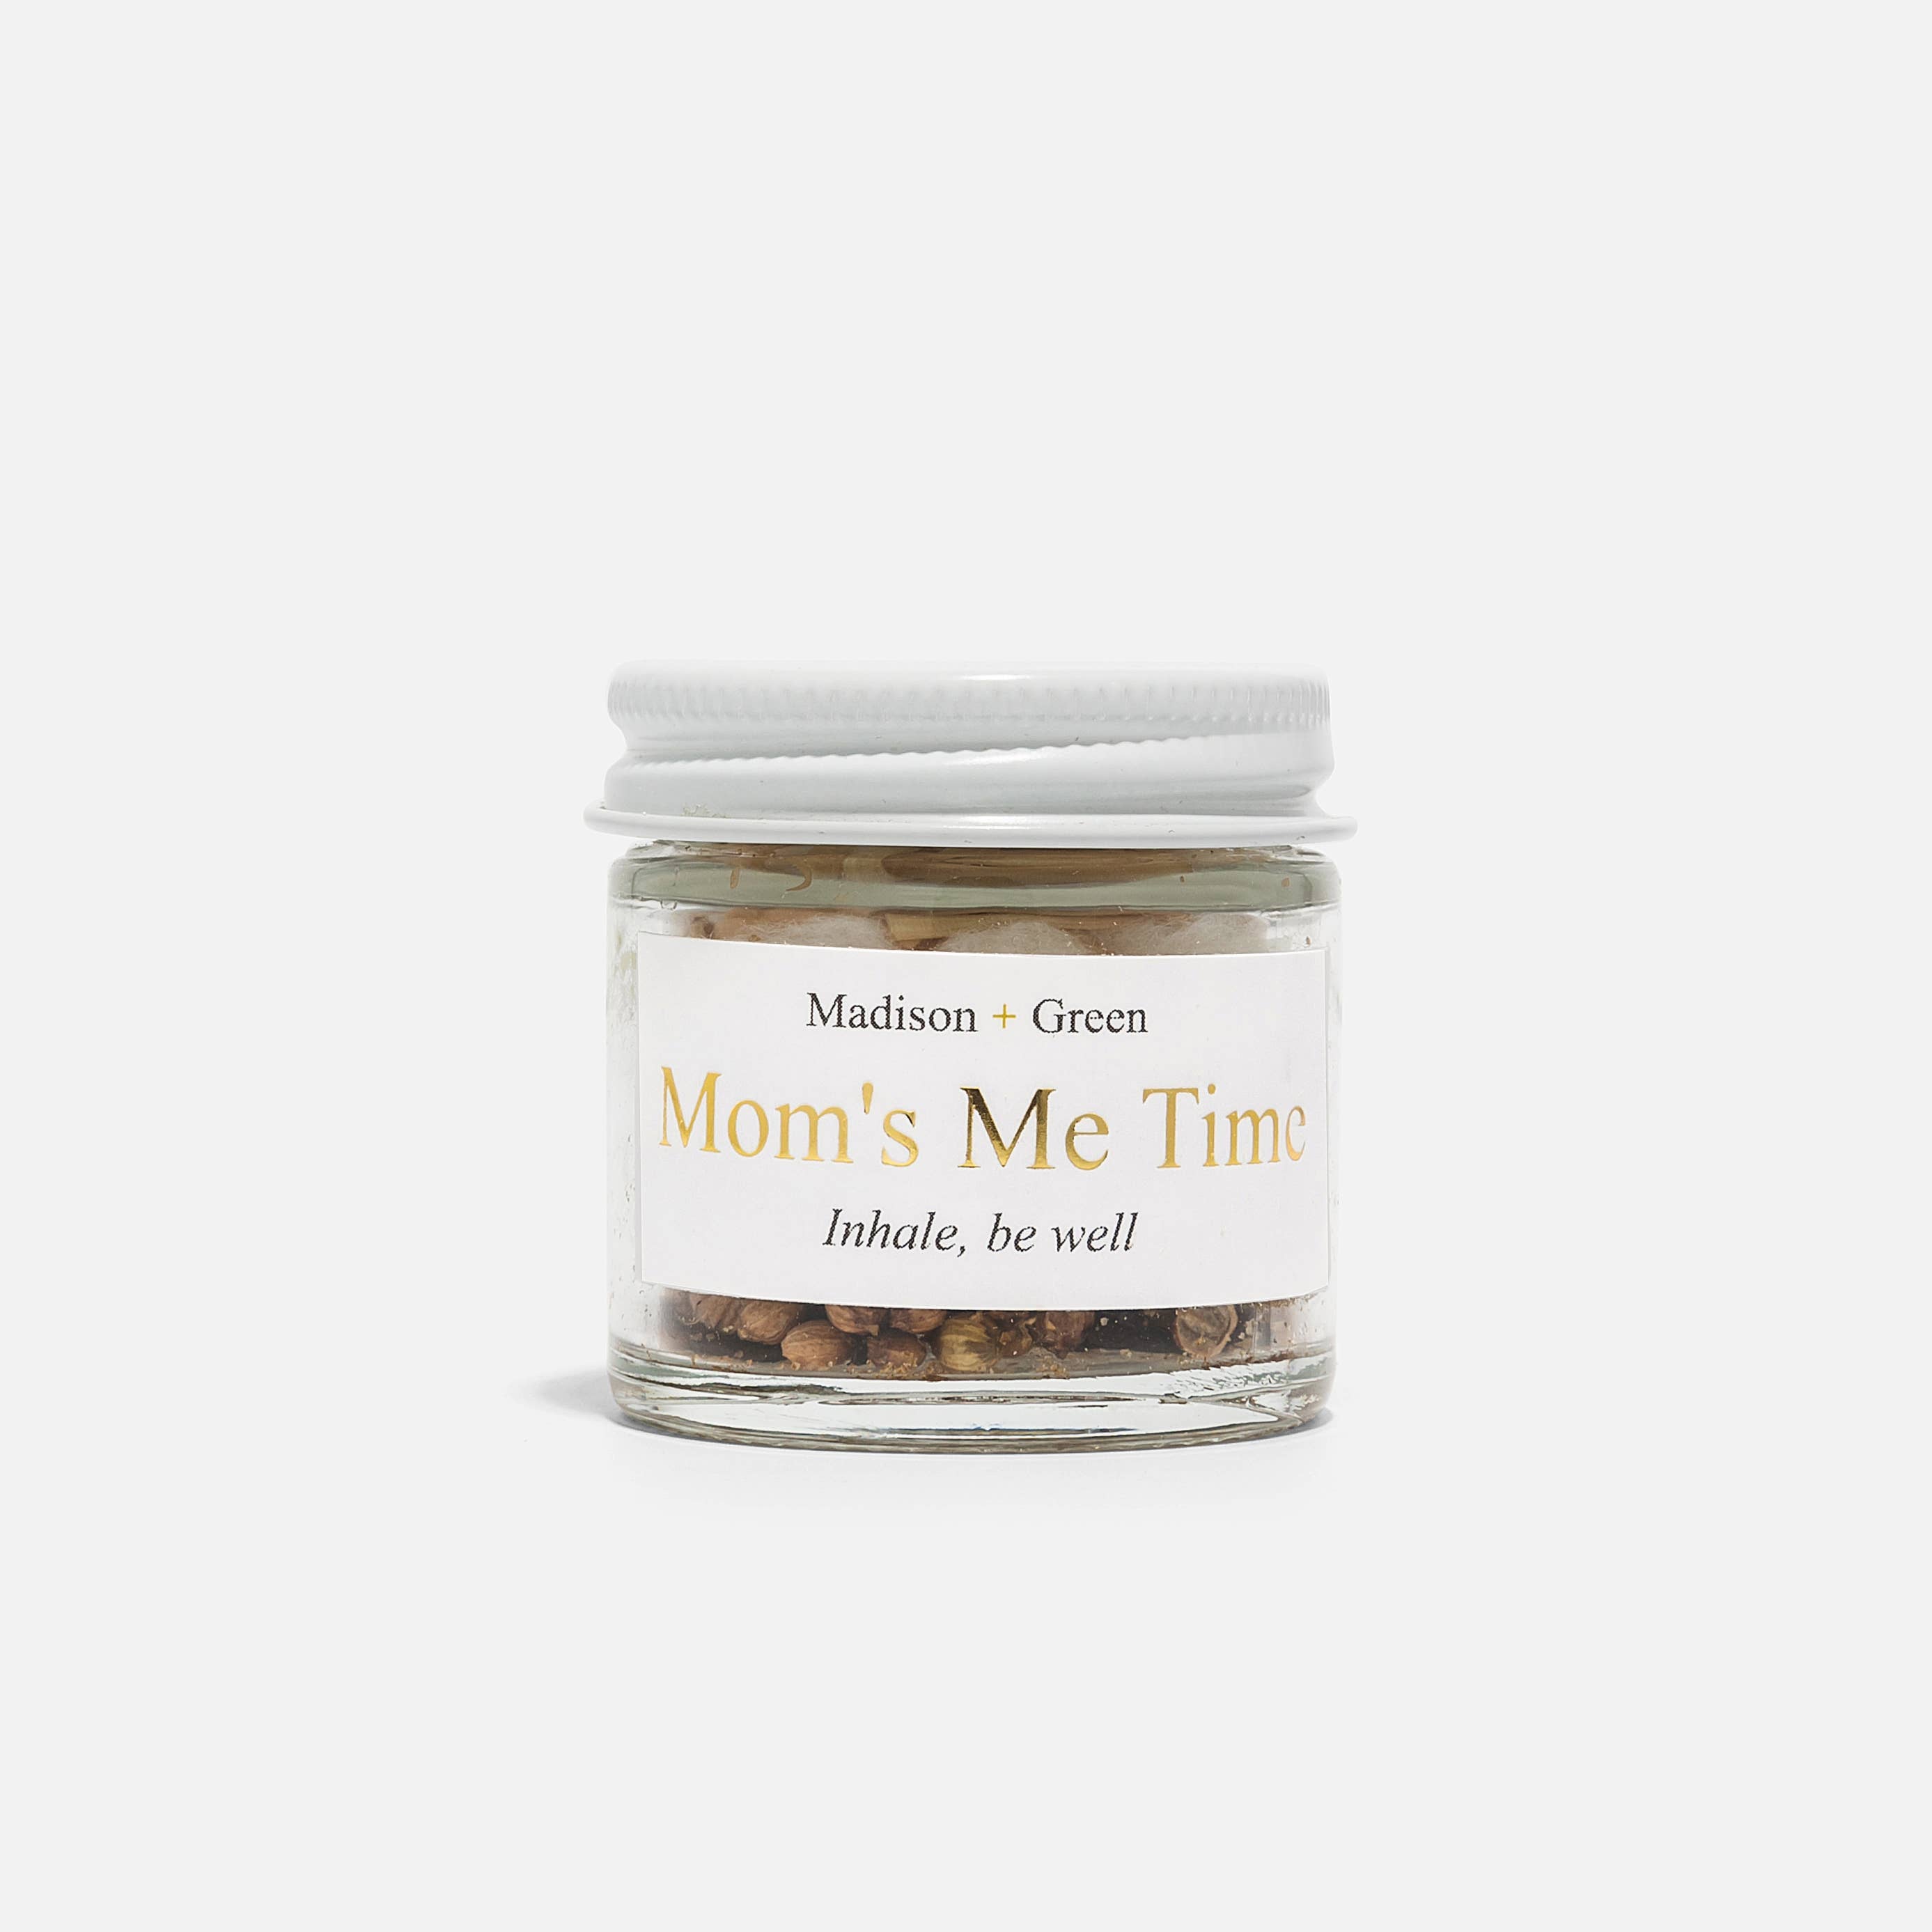 "Mom's Me Time" - Mom's Stress Relief Aromatherapy Inhaler